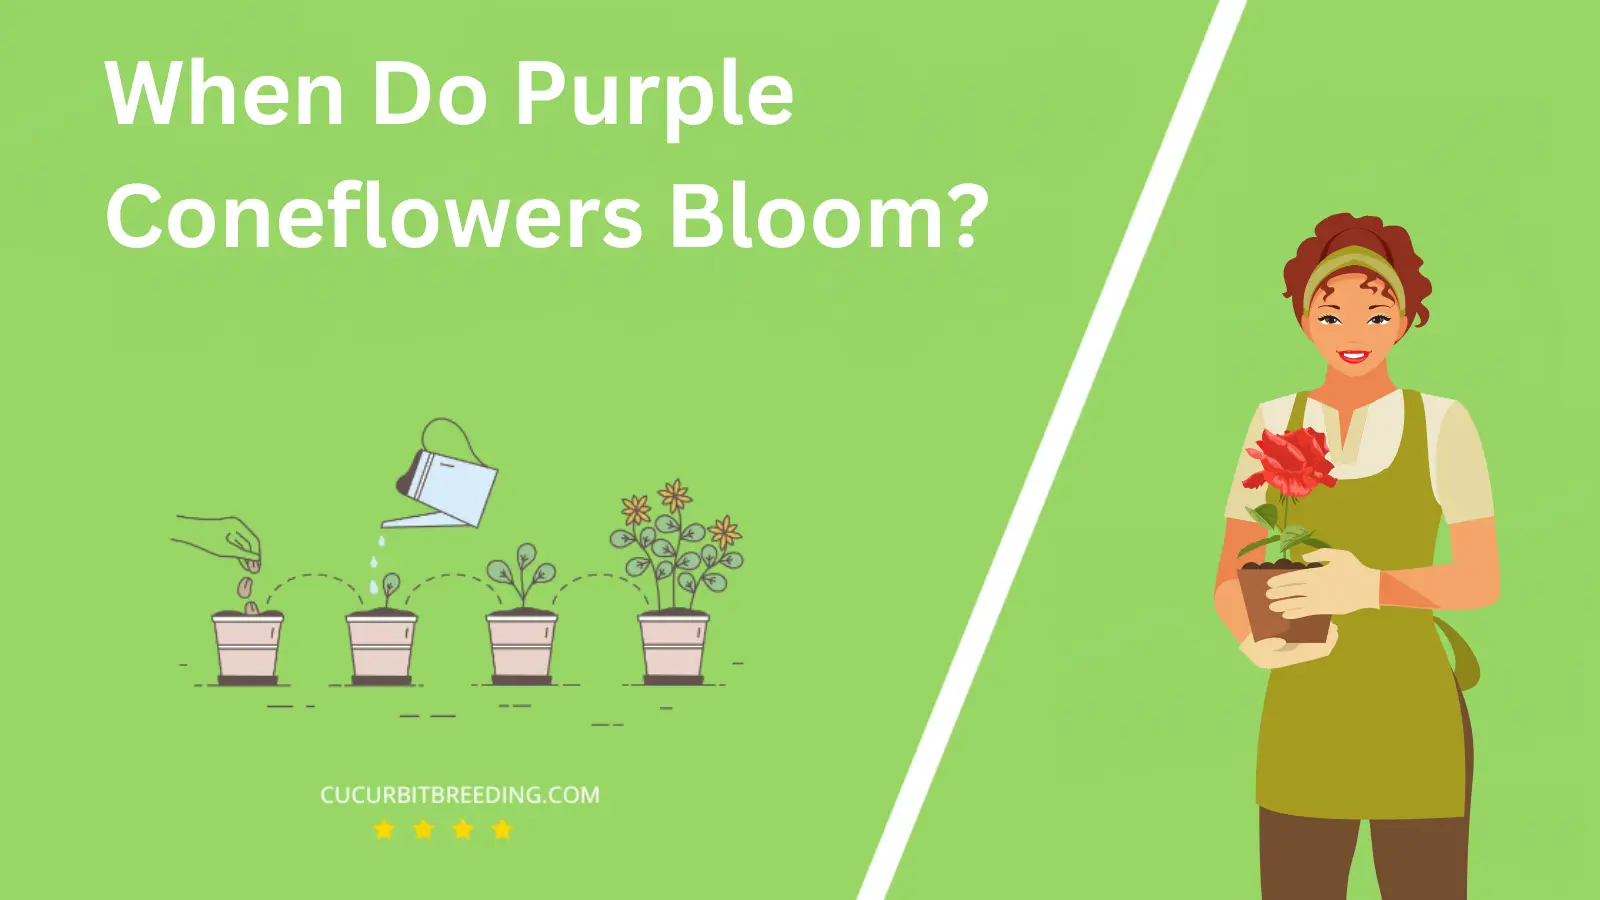 When Do Purple Coneflowers Bloom?